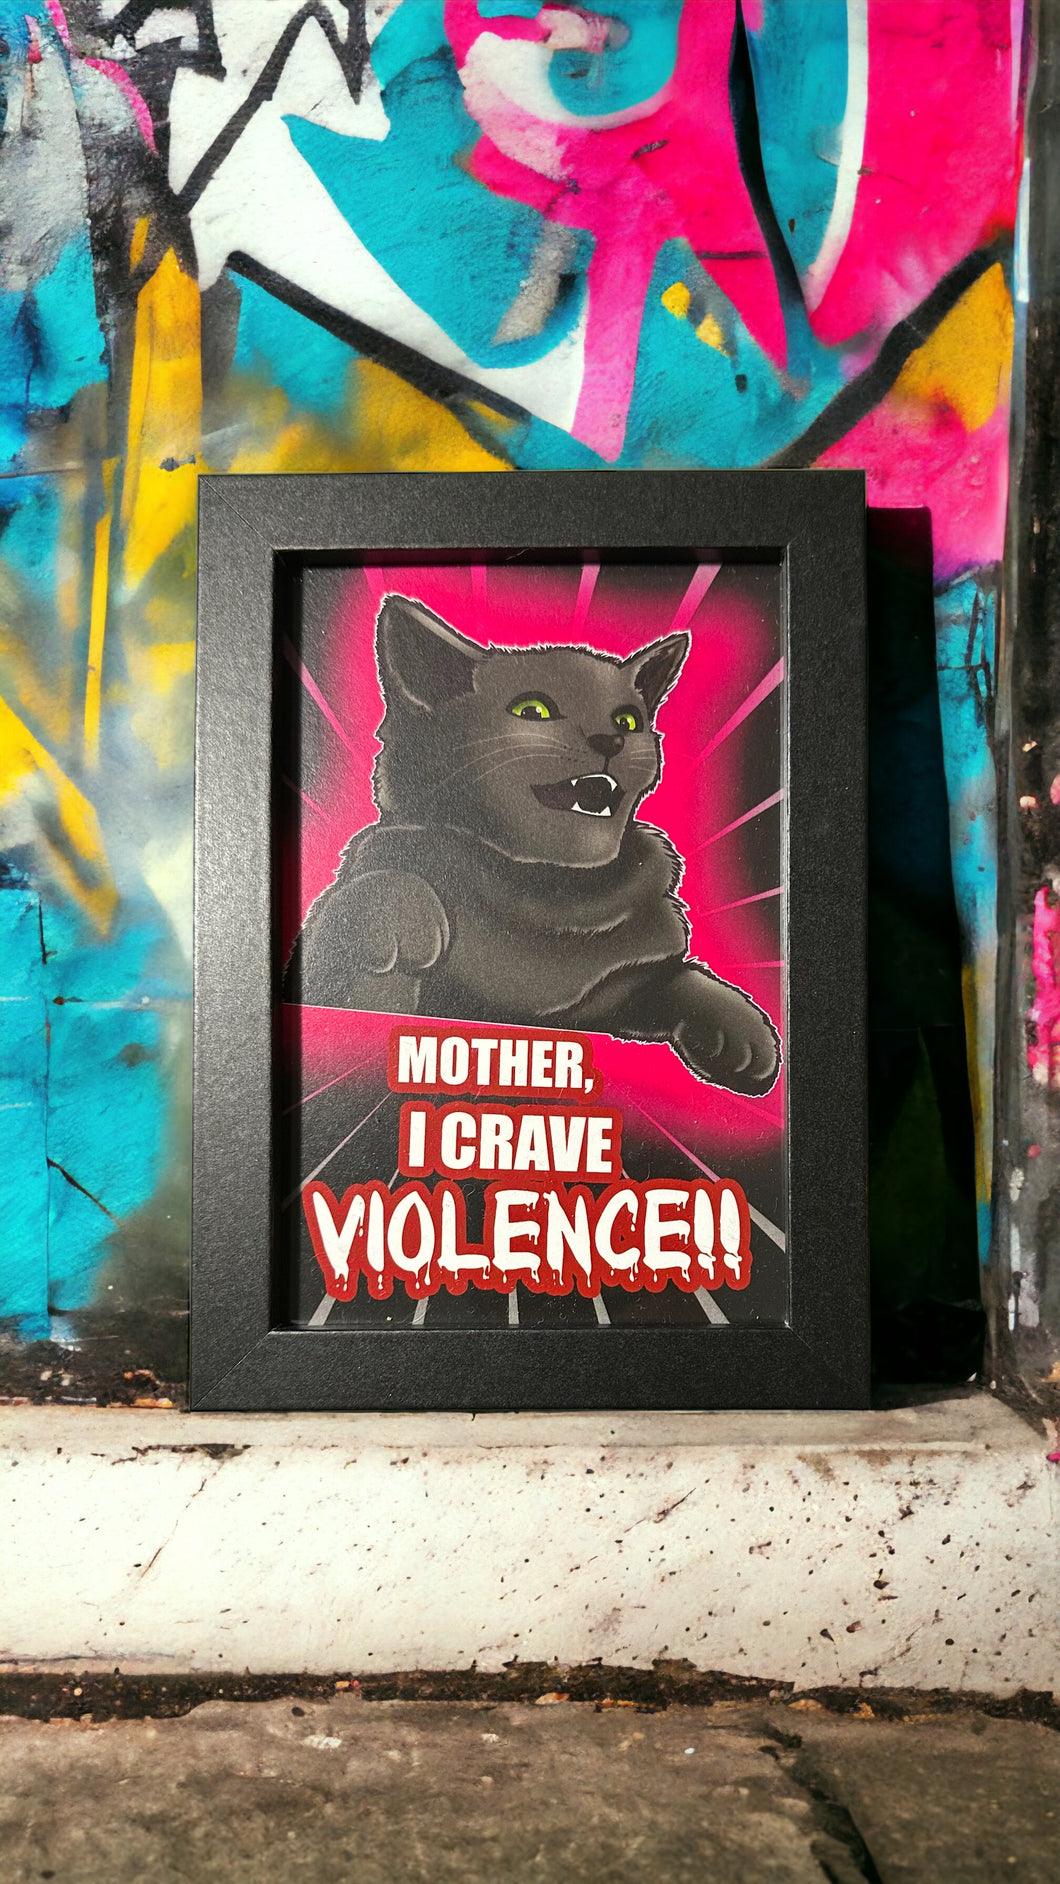  Mother, I crave violence! Black kitty cat meme - Framed 4 x 6 inch art print!